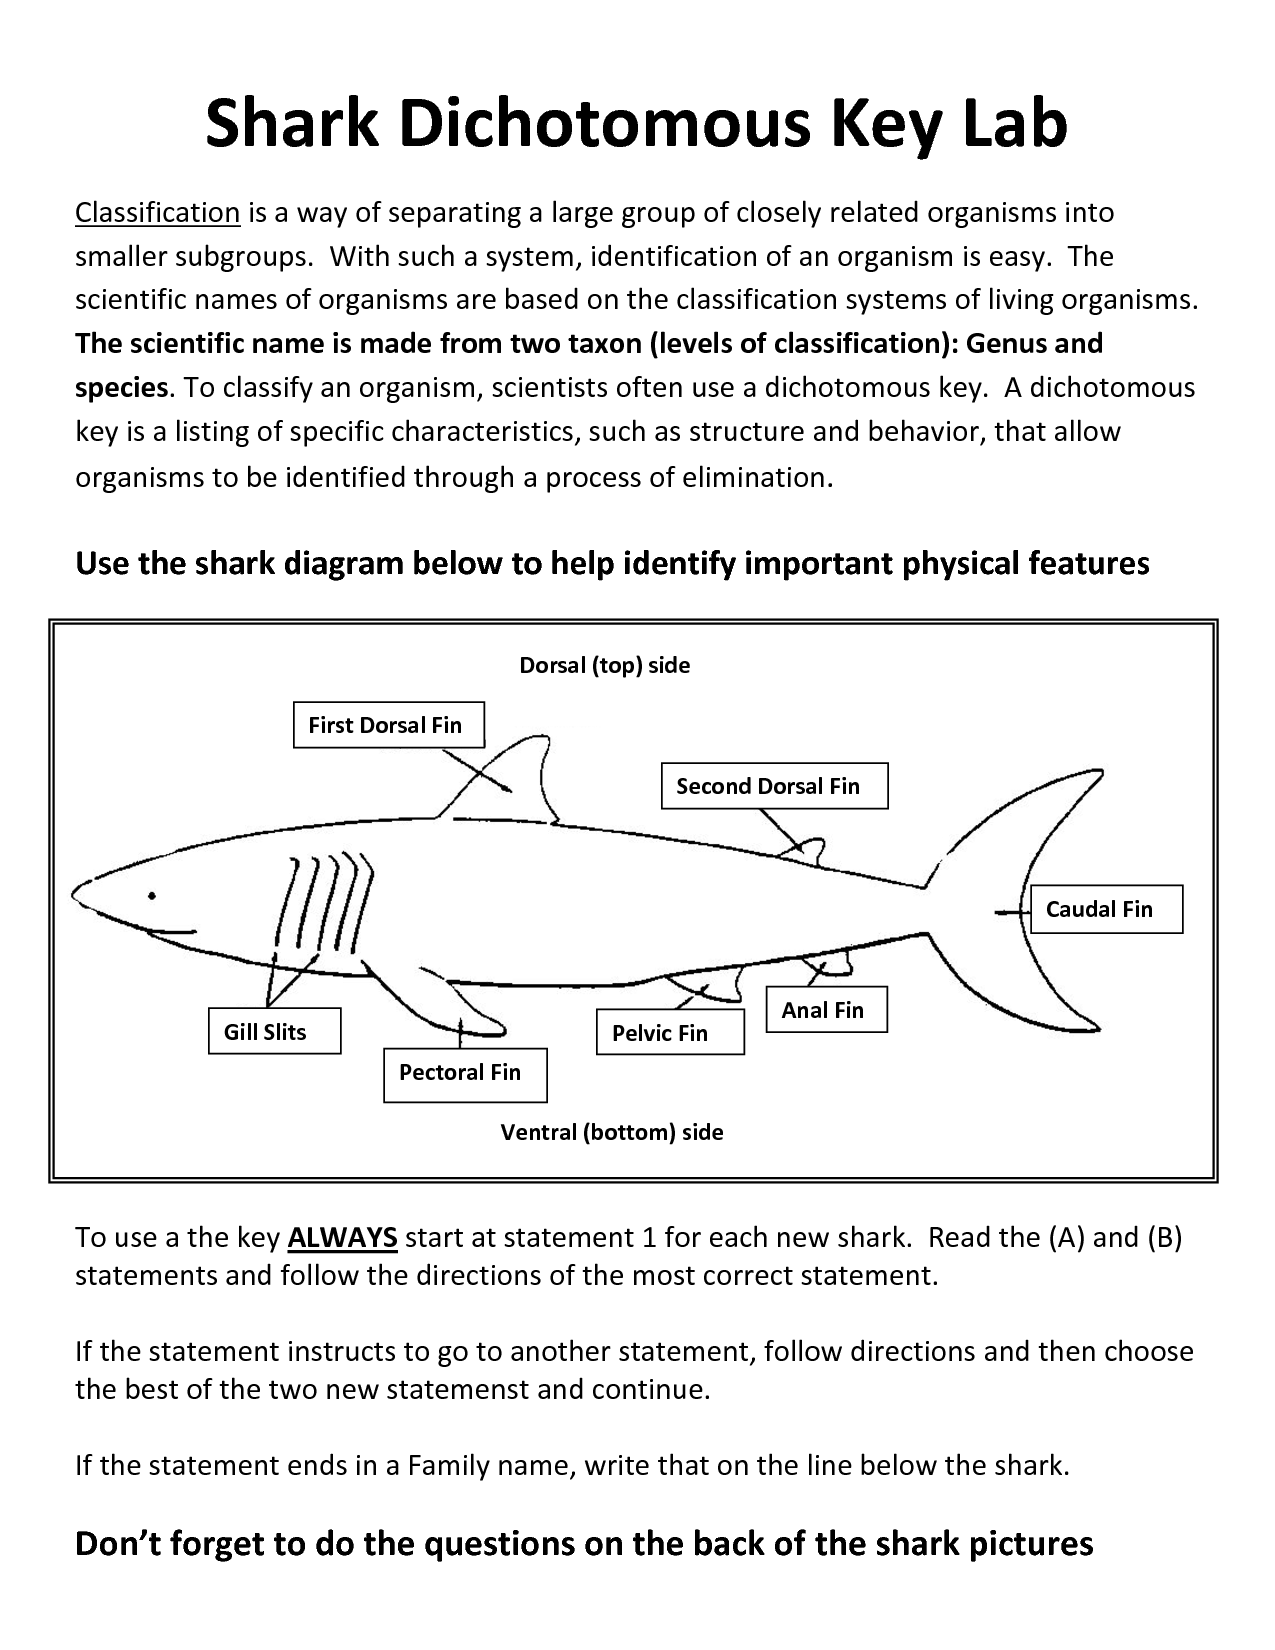 18-best-images-of-shark-dichotomous-key-worksheet-shark-dichotomous-key-dichotomous-key